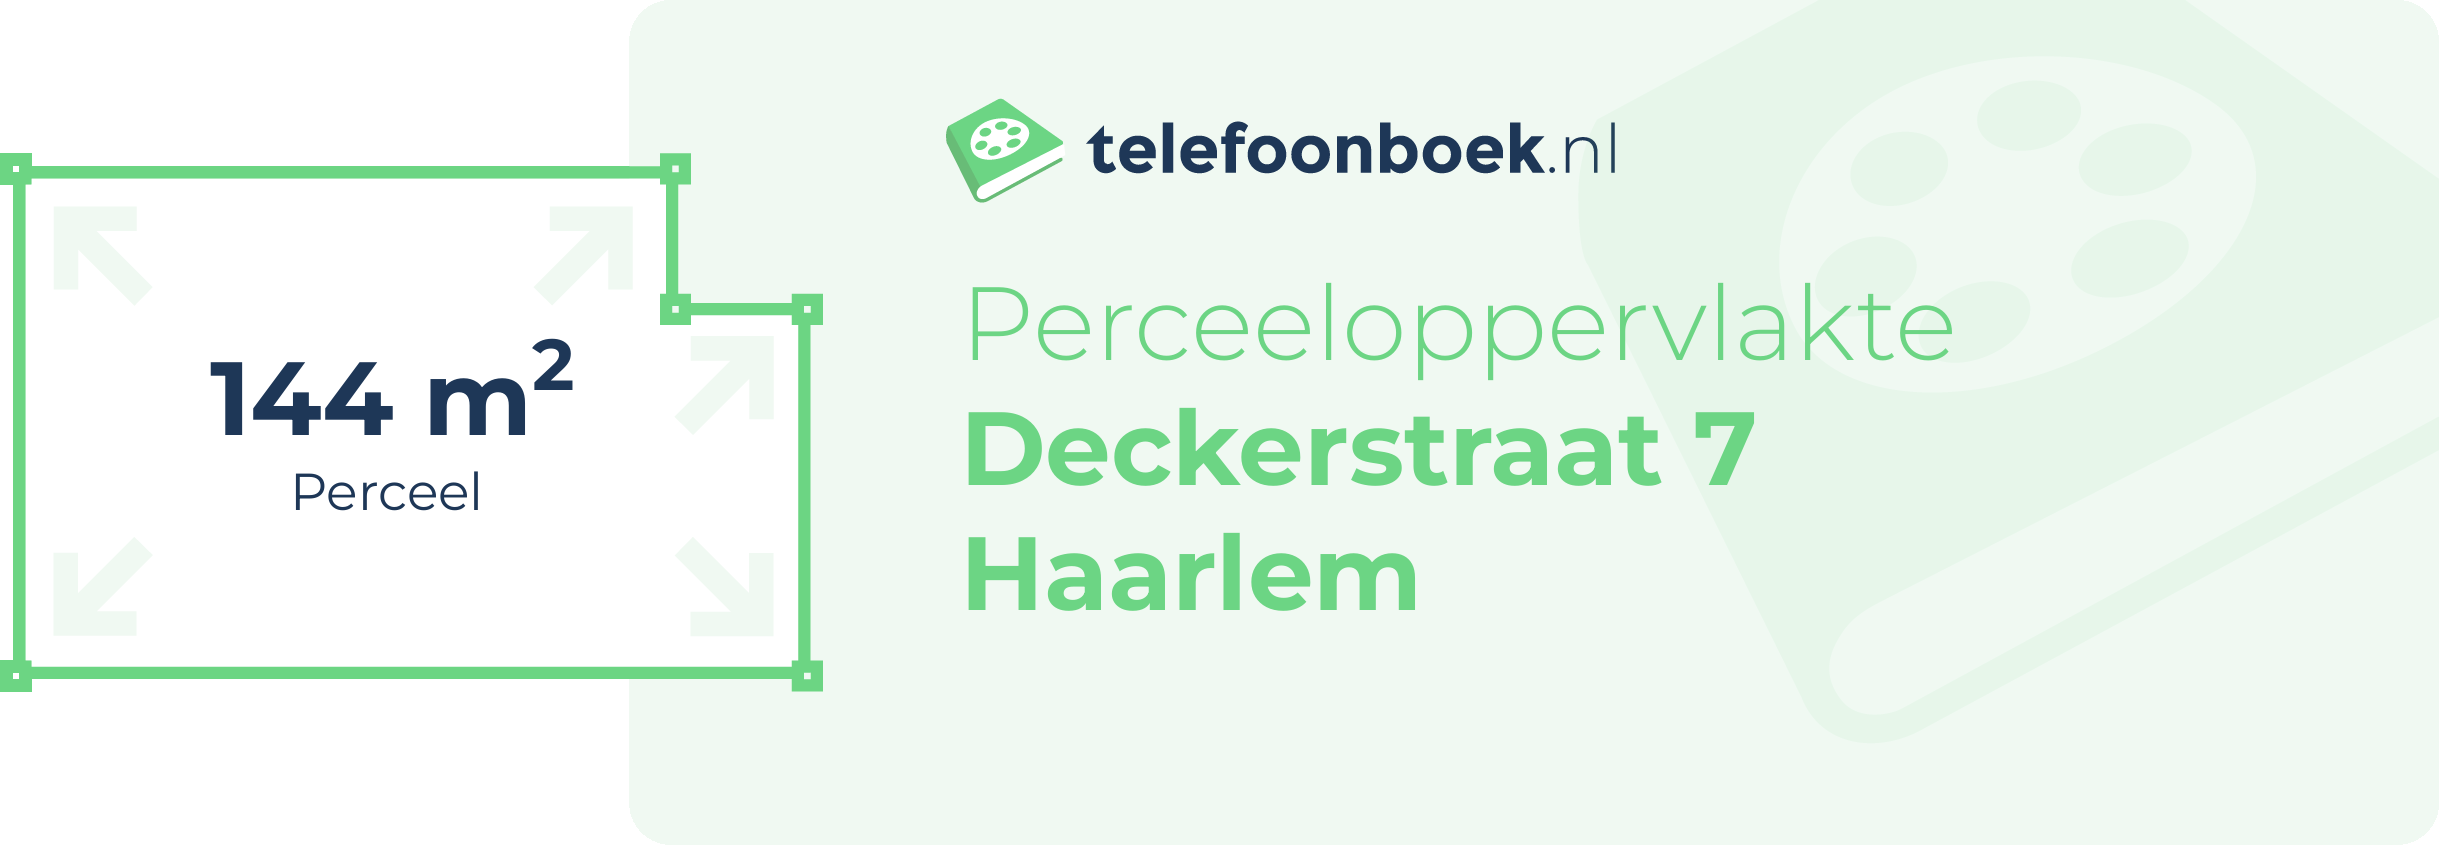 Perceeloppervlakte Deckerstraat 7 Haarlem